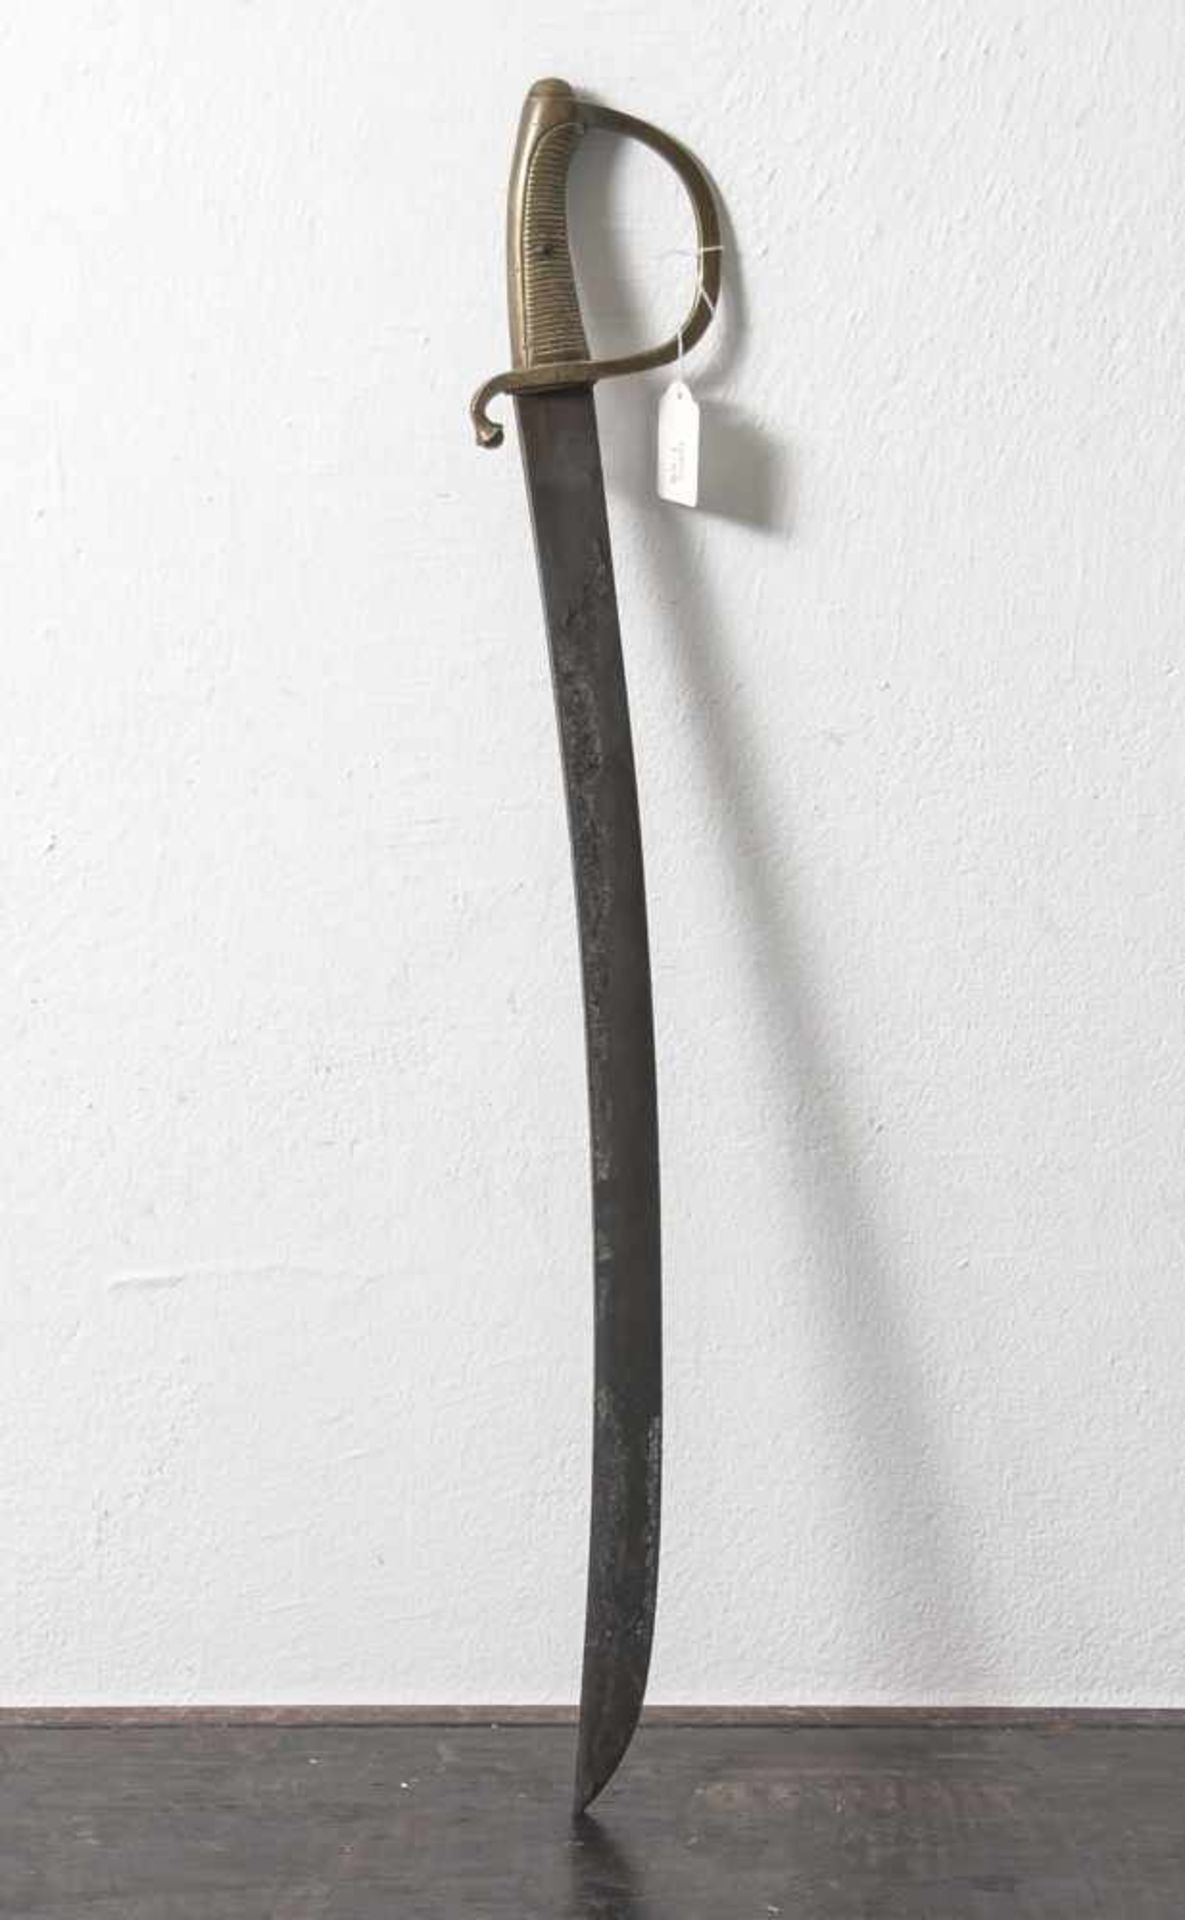 Sabre briquet, wohl franz. Infanterie, auf leicht gebogener Klinge dat. 1839, Messinggriffmit